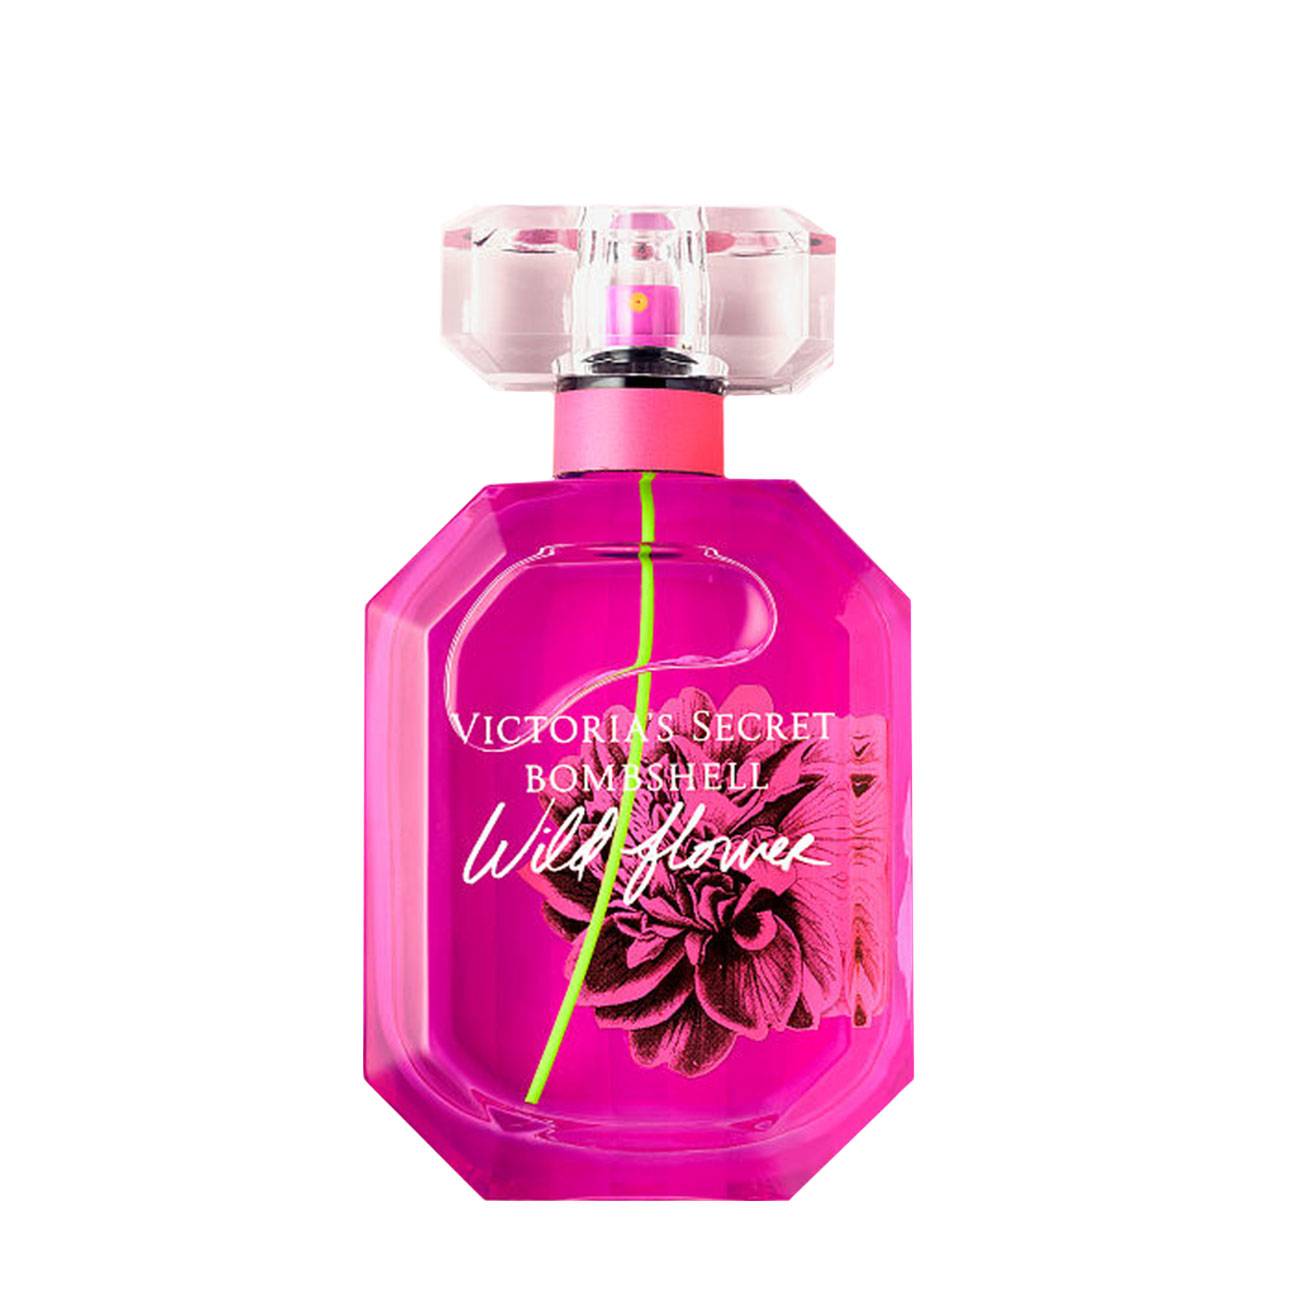 Apa de Parfum Victoria’s Secret BOMBSHELL WILD FLOWER 100ml cu comanda online